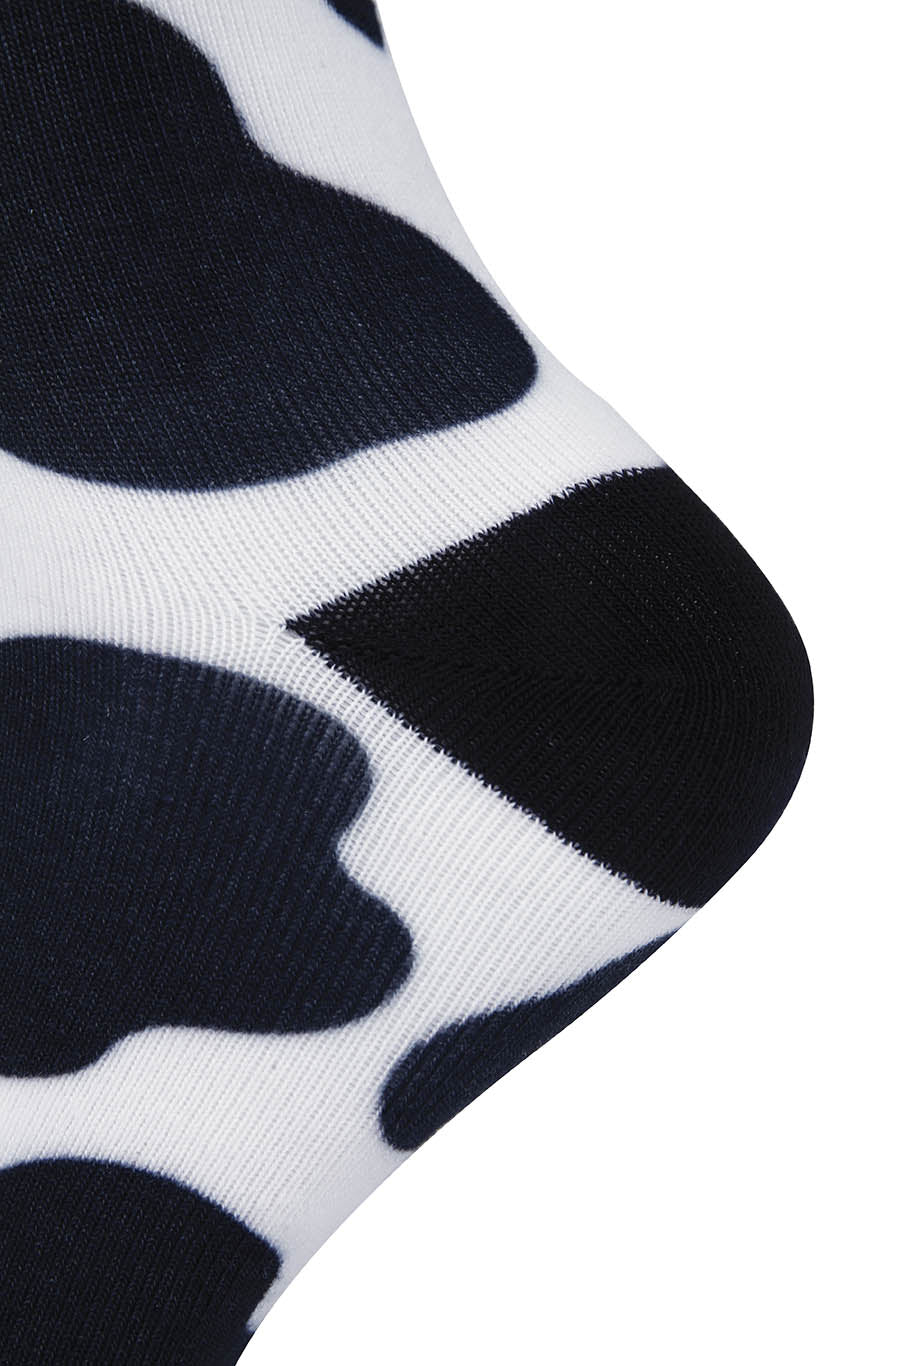 Cow Printed Sock (2 Colors)